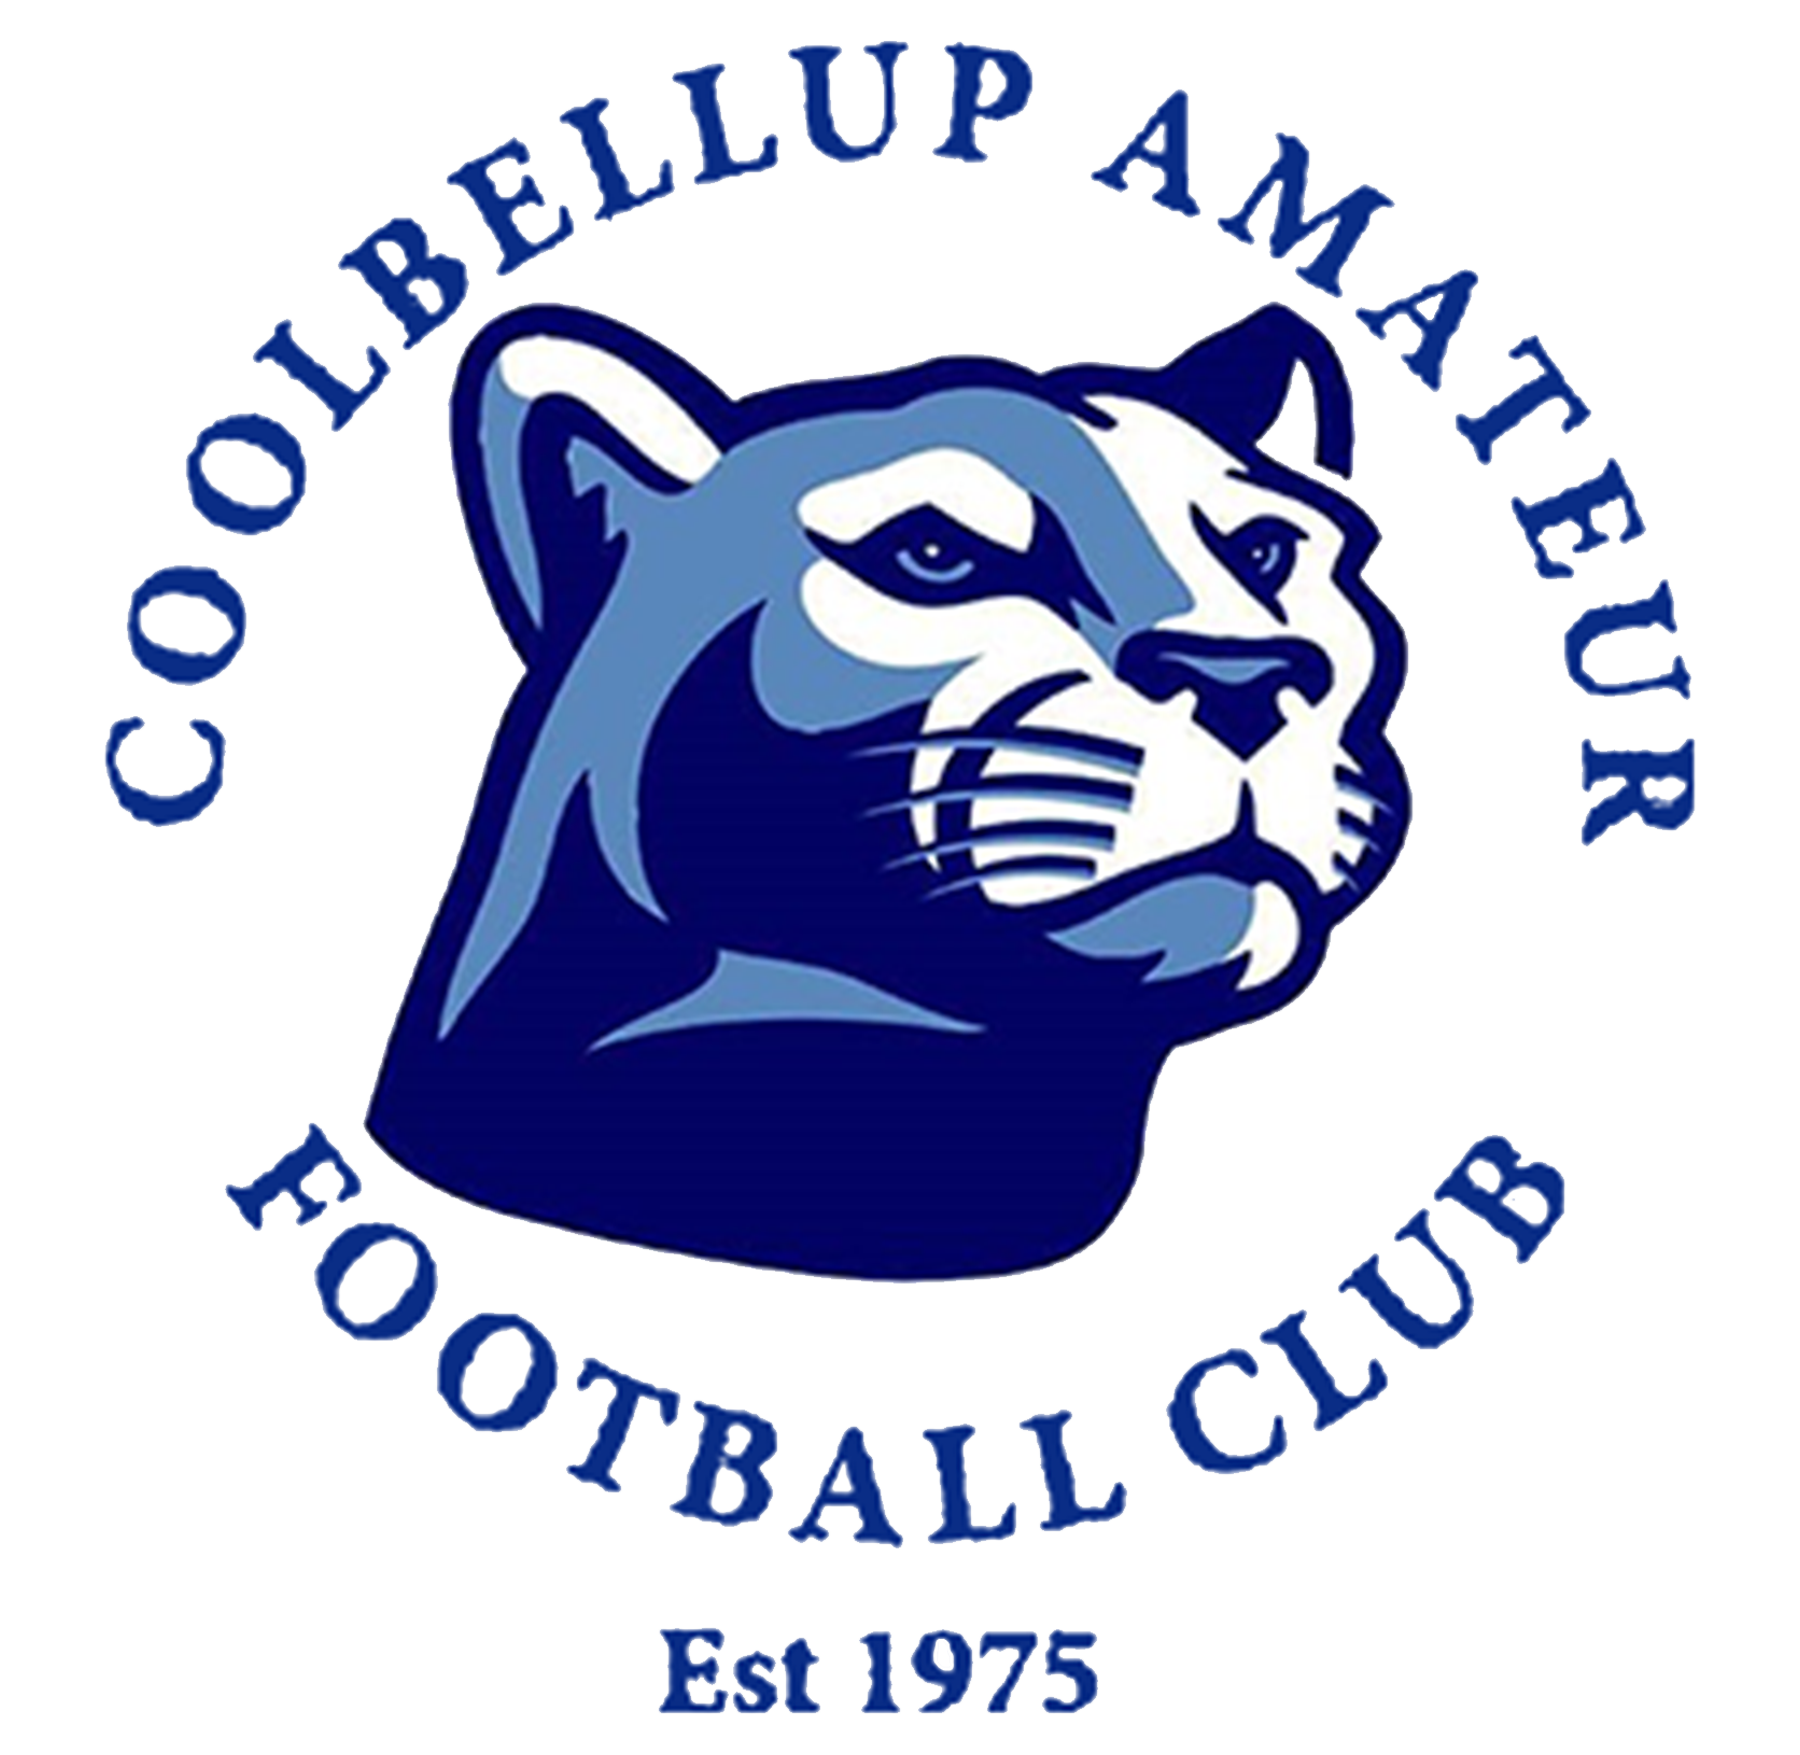 Coolbellup Football Club